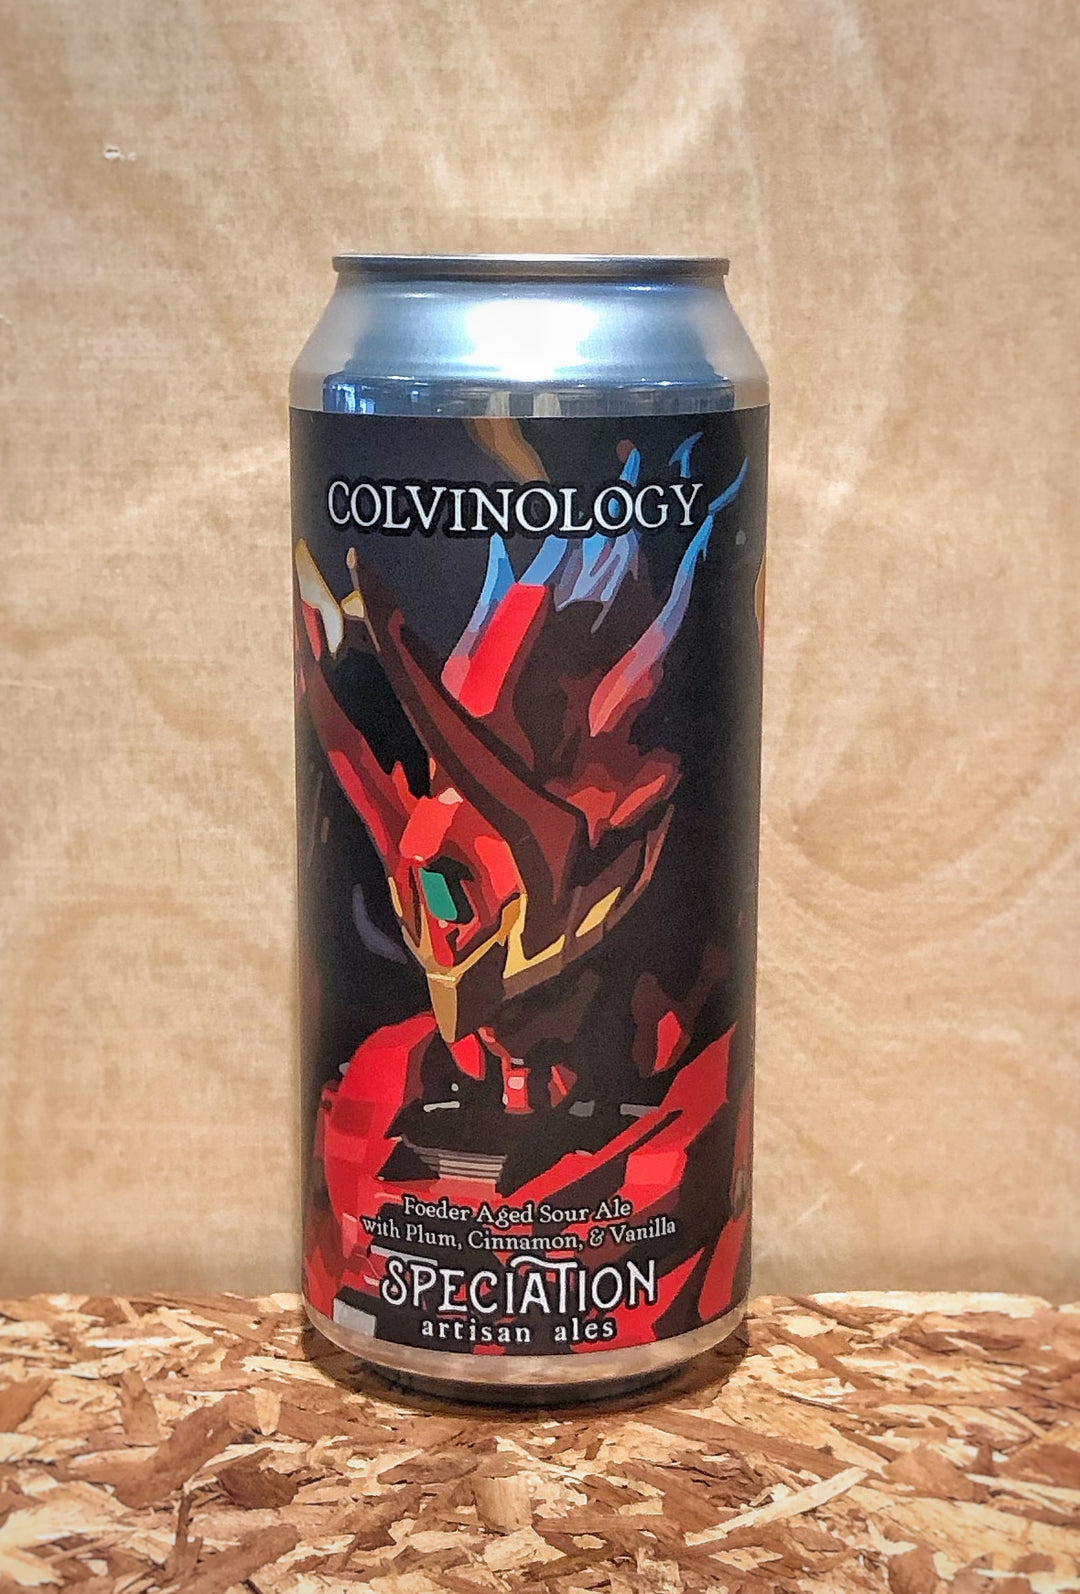 Speciation Artisan Ales 'Colvinology' Foeder Aged Sour Ale with Plum, Cinnamon, and Vanilla (Grand Rapids, MI)